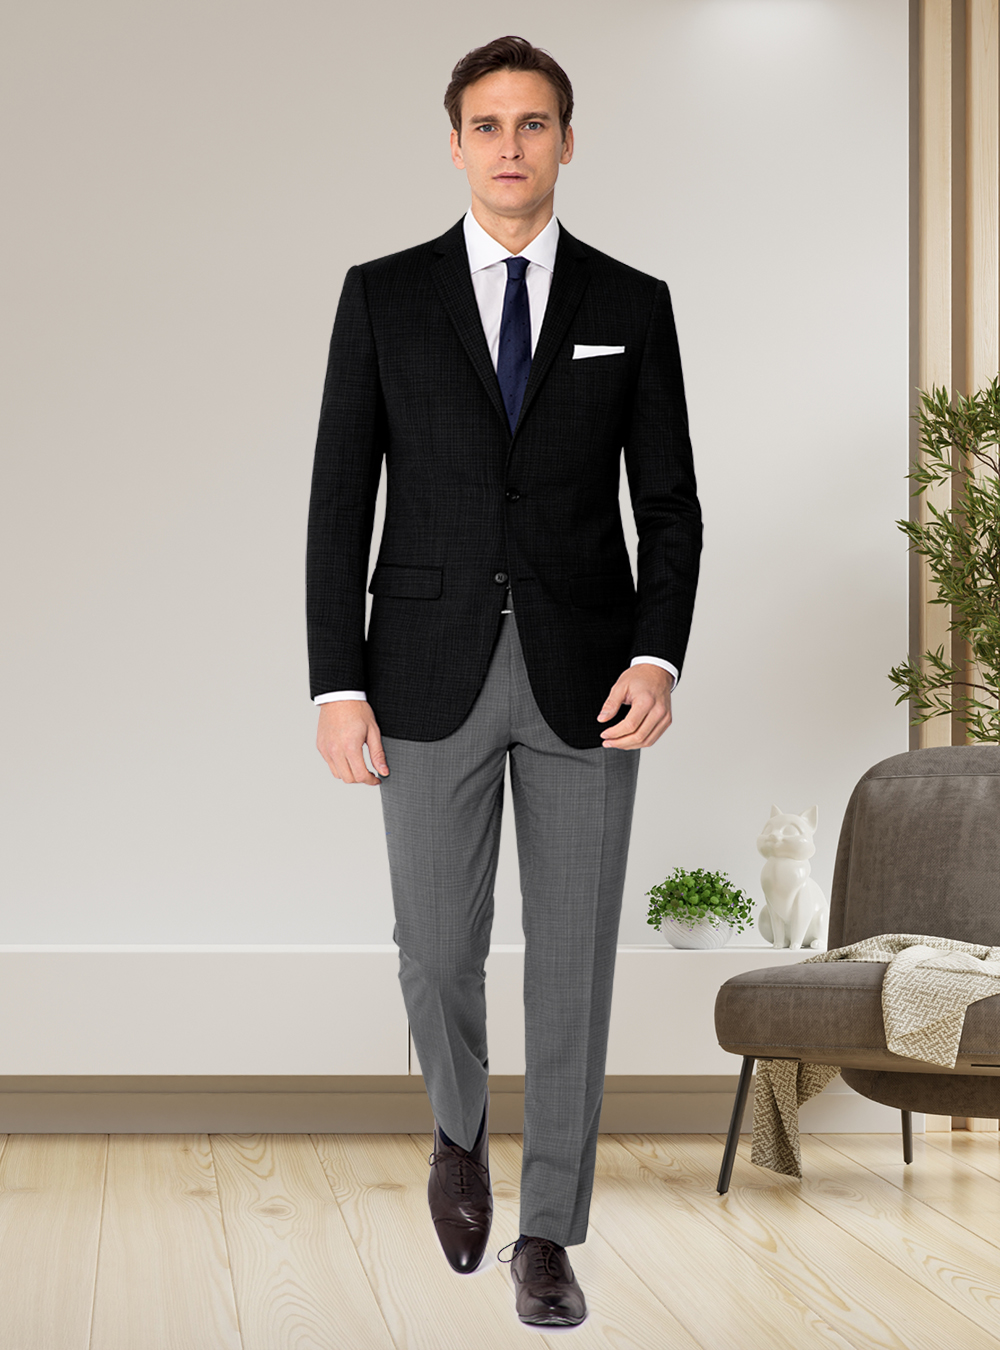 black suit jacket, white shirt, and grey pants